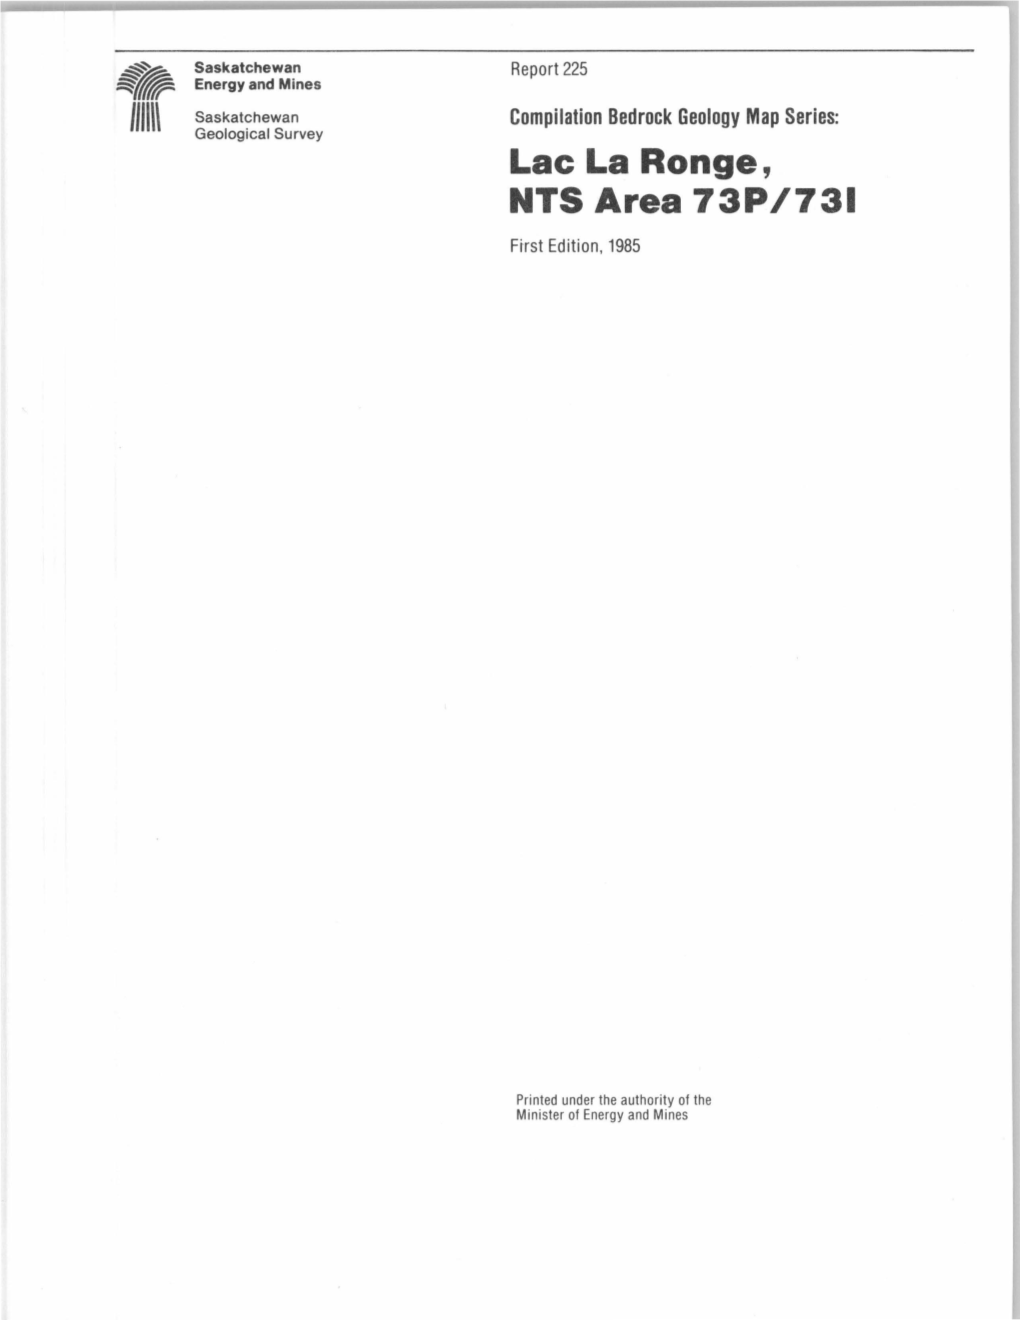 Lac La Ronge, NTS Area 73P/731 Frrst Edition, 1985